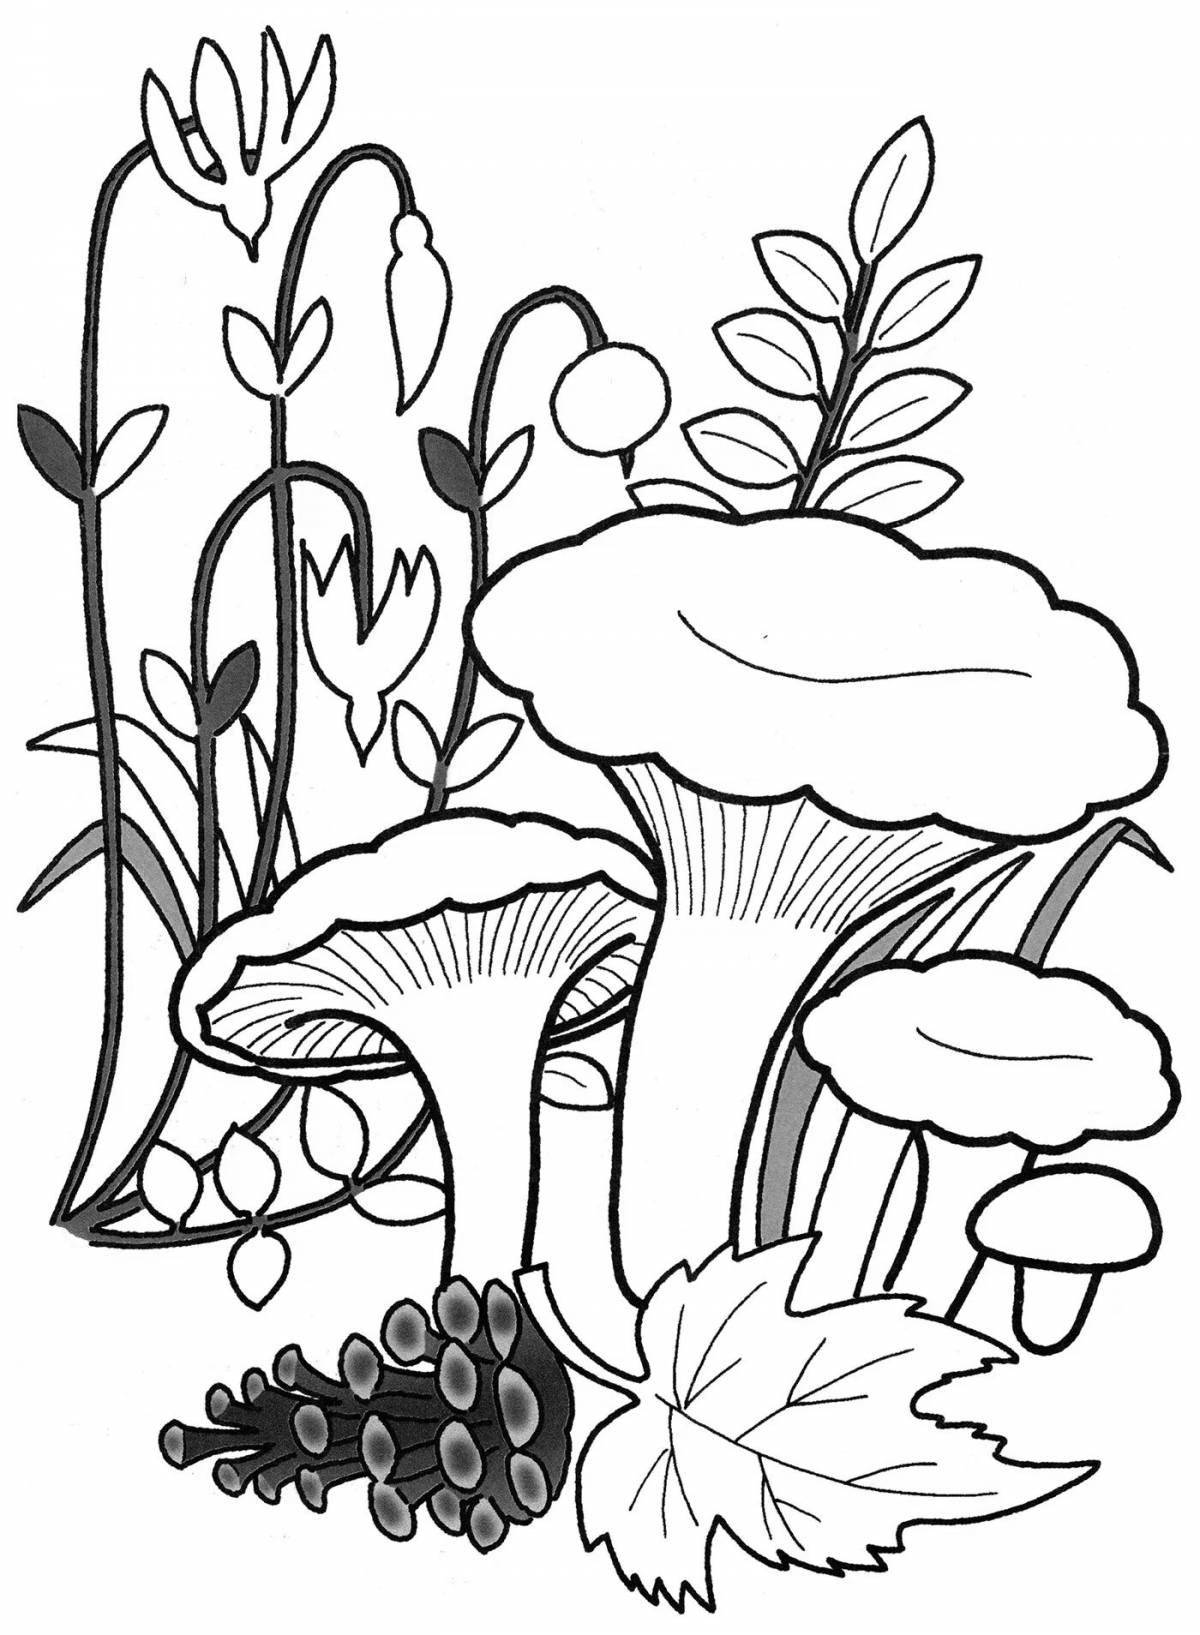 Coloring fairy chanterelle mushrooms